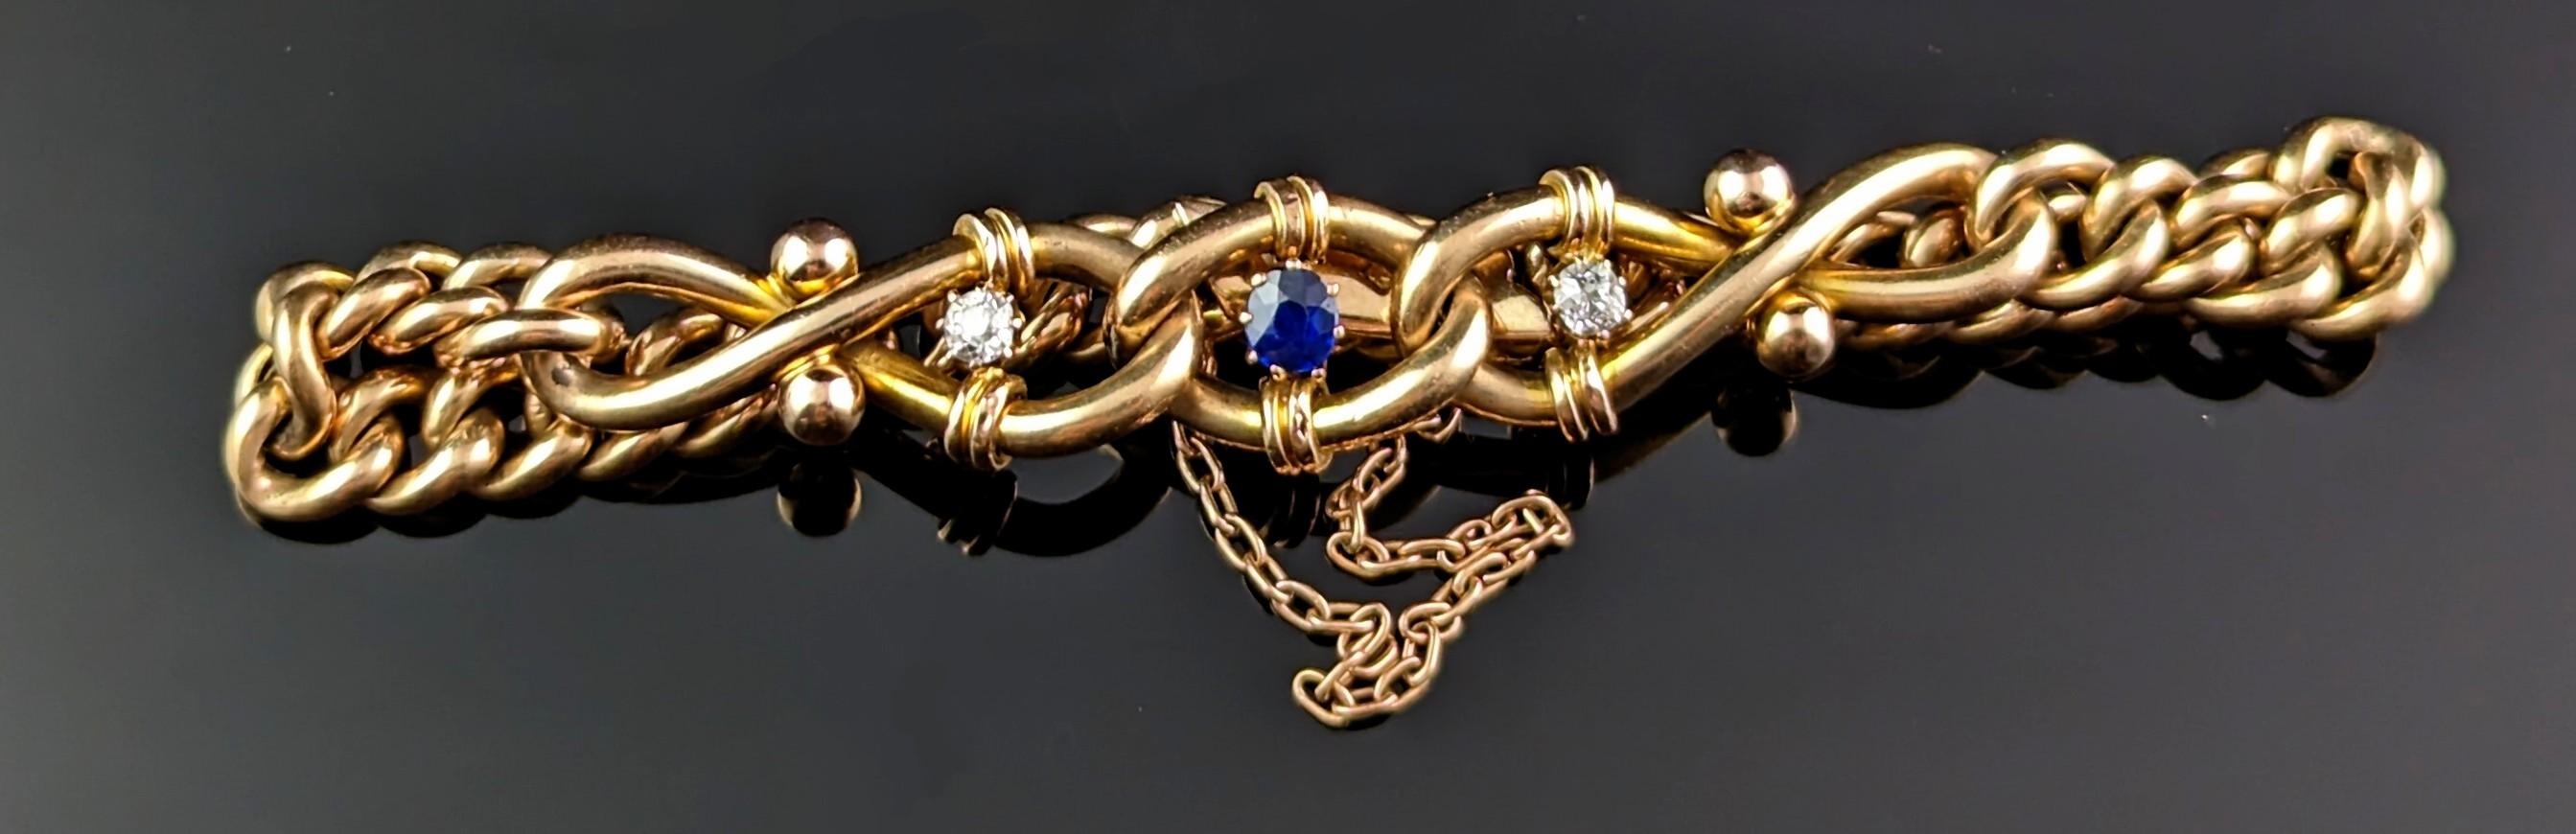 Antique Sapphire and Diamond Bracelet, Curb Link, 15k Gold For Sale 1